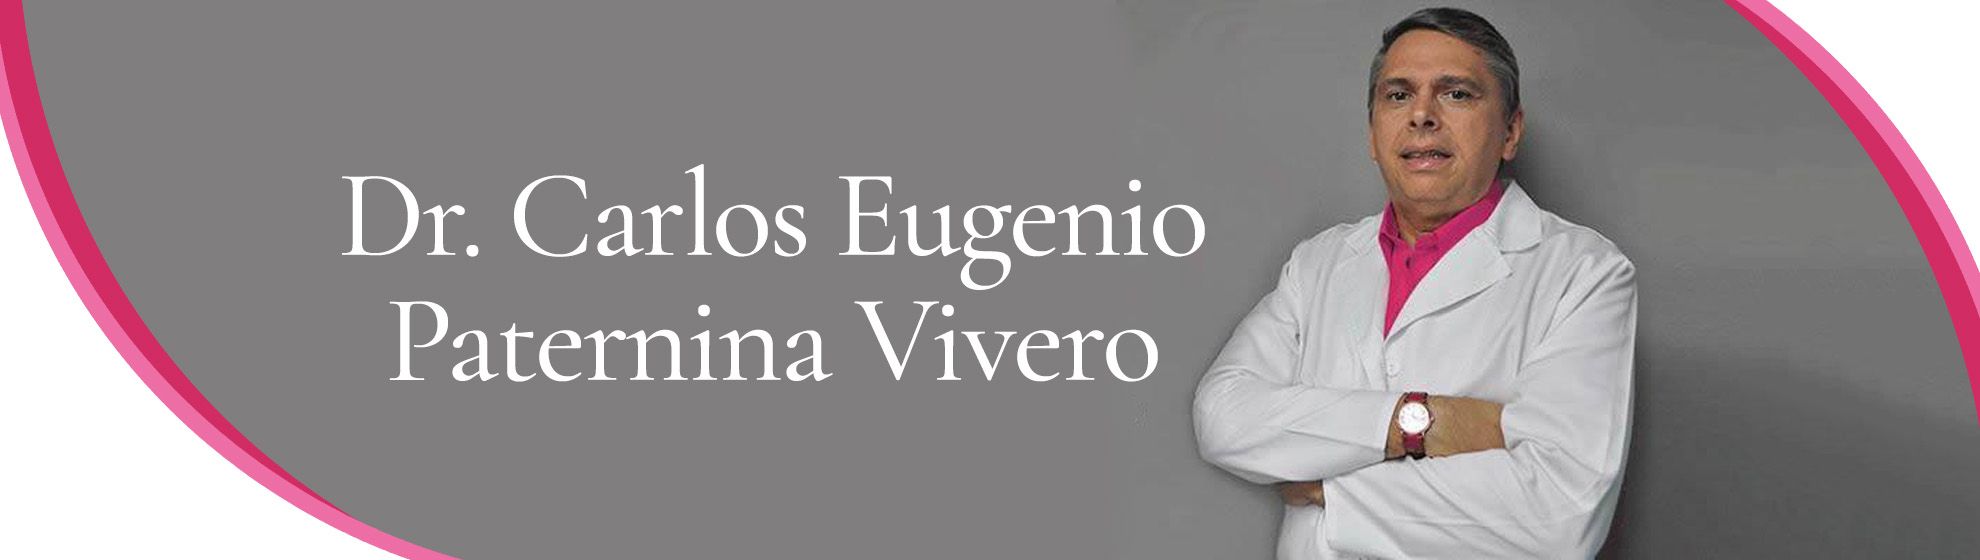 Dr. Carlos Eugenio Paternina Vivero